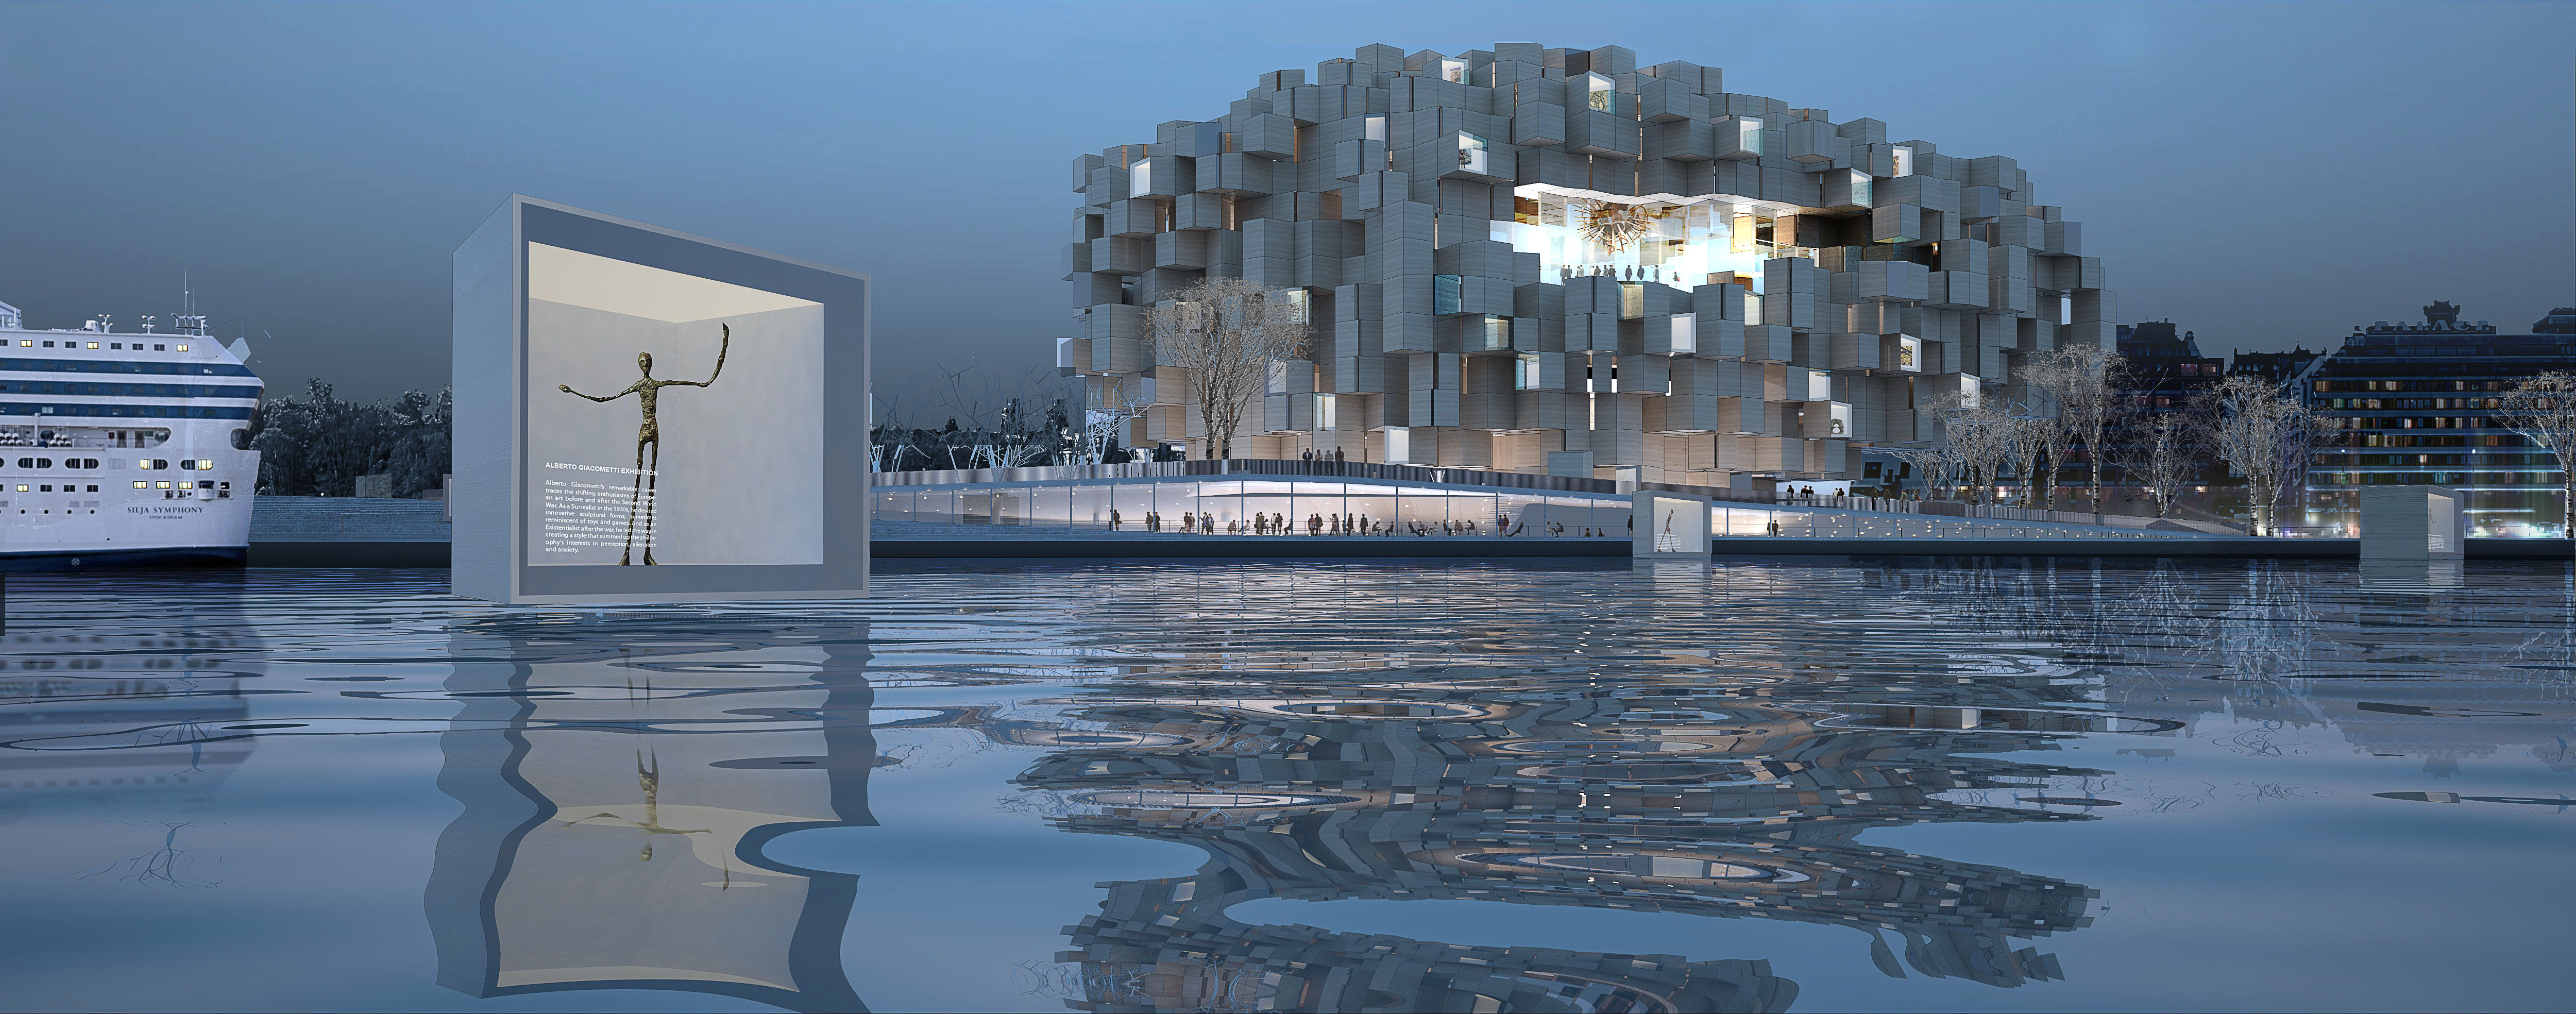 Renderings of Guggenheim Helsinki Design Competition by Ja Architecture Studio